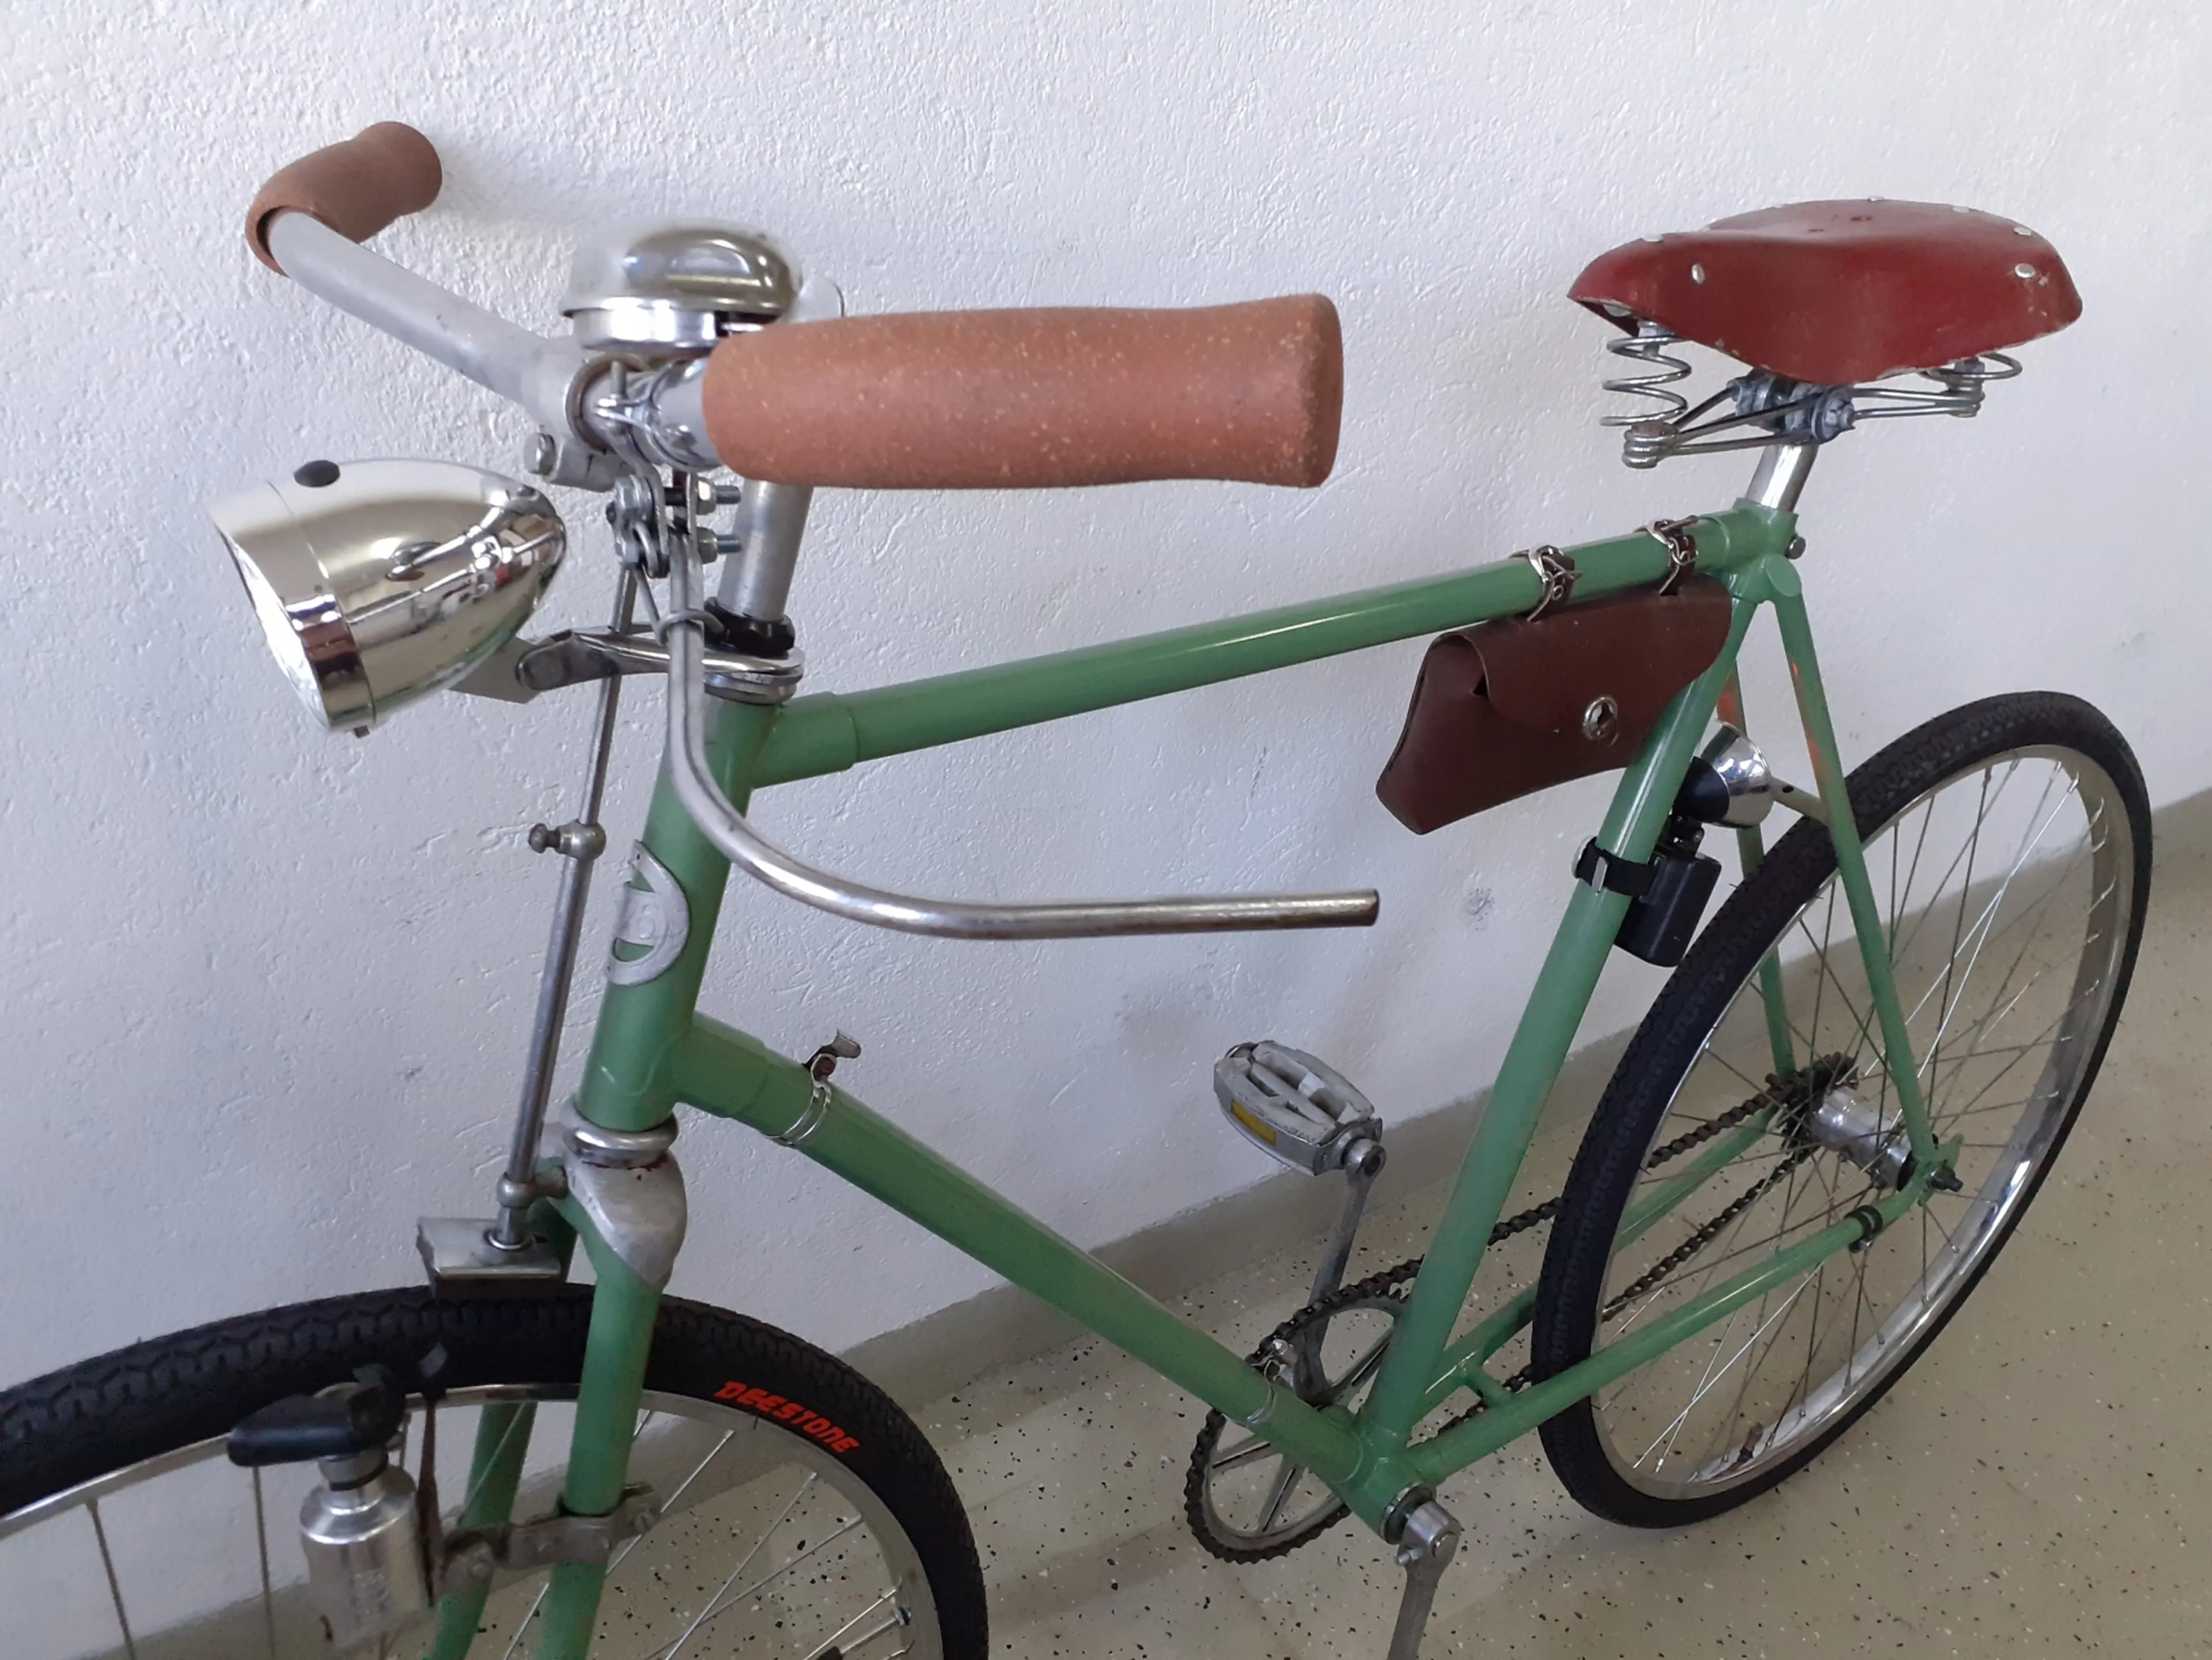 1. Bicicleta retro